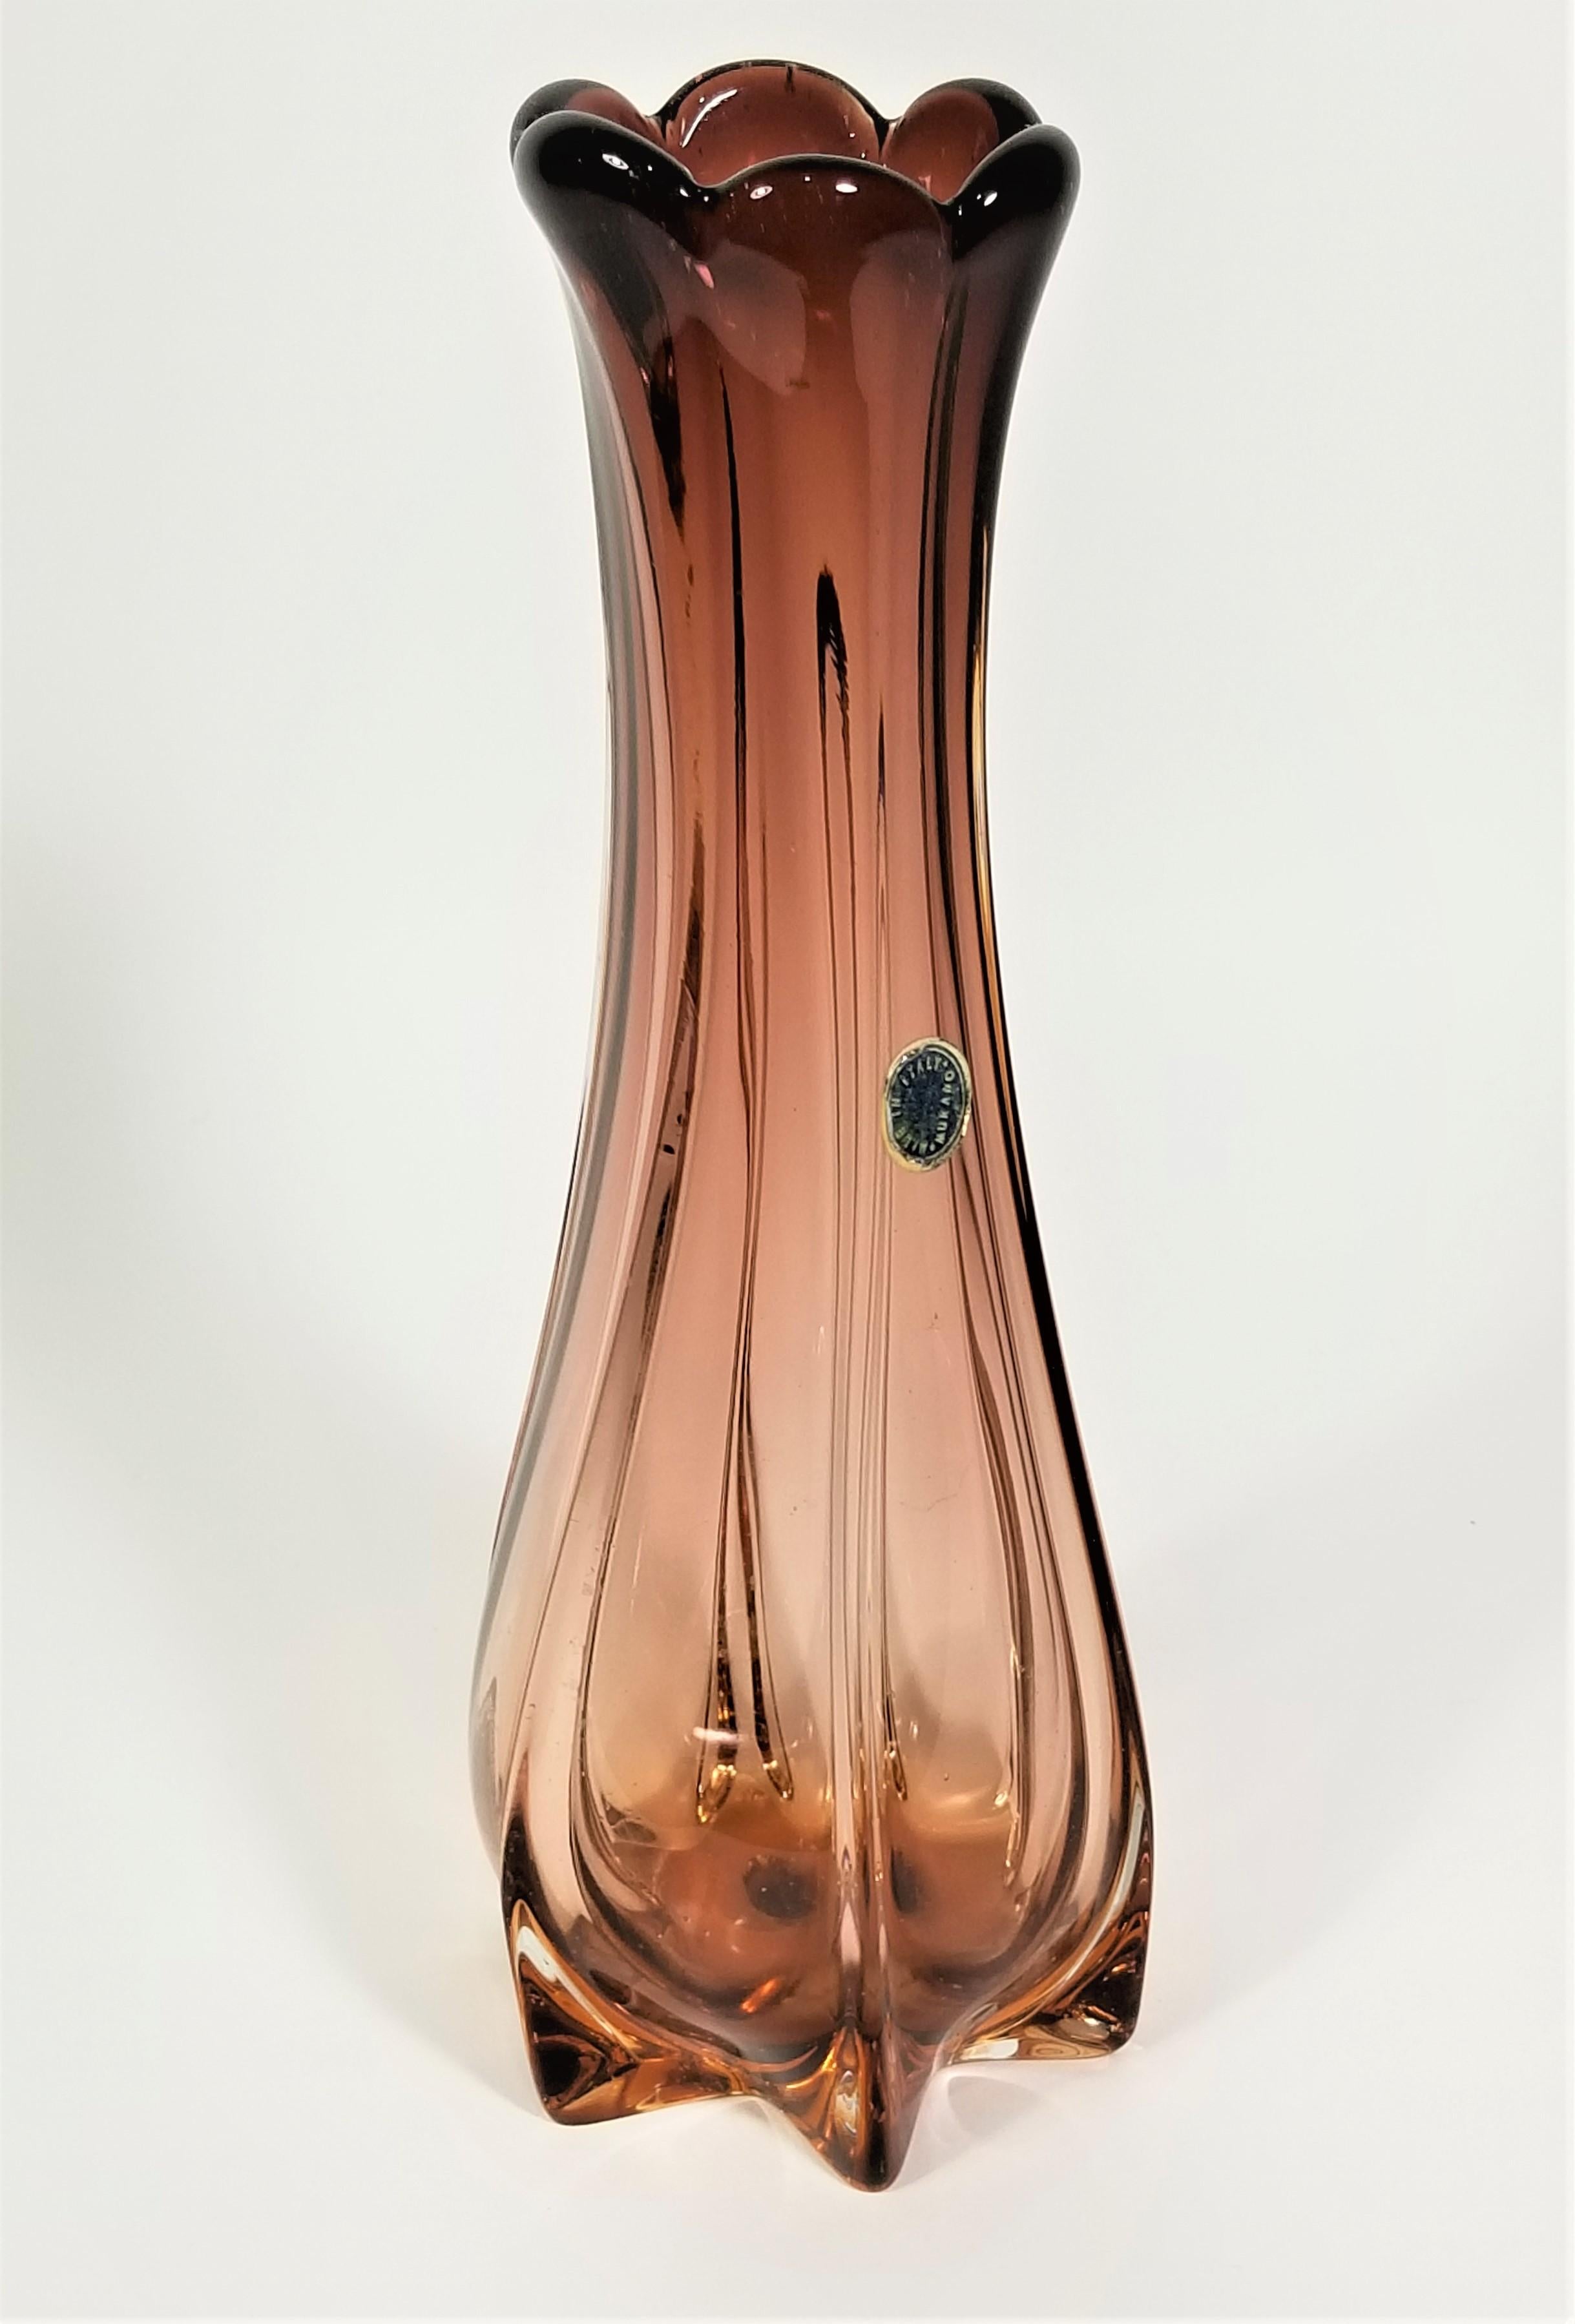 Mid century 1950s 1960s Murano hand blown art glass vase. Beautiful rose color. Still retains original Murano marking sticker. Made in Italy. 

Measurements:
Vase height: 9.5 inches
Vase diameter Top: 2.5 inches
Vase diameter Bottom: 3.5